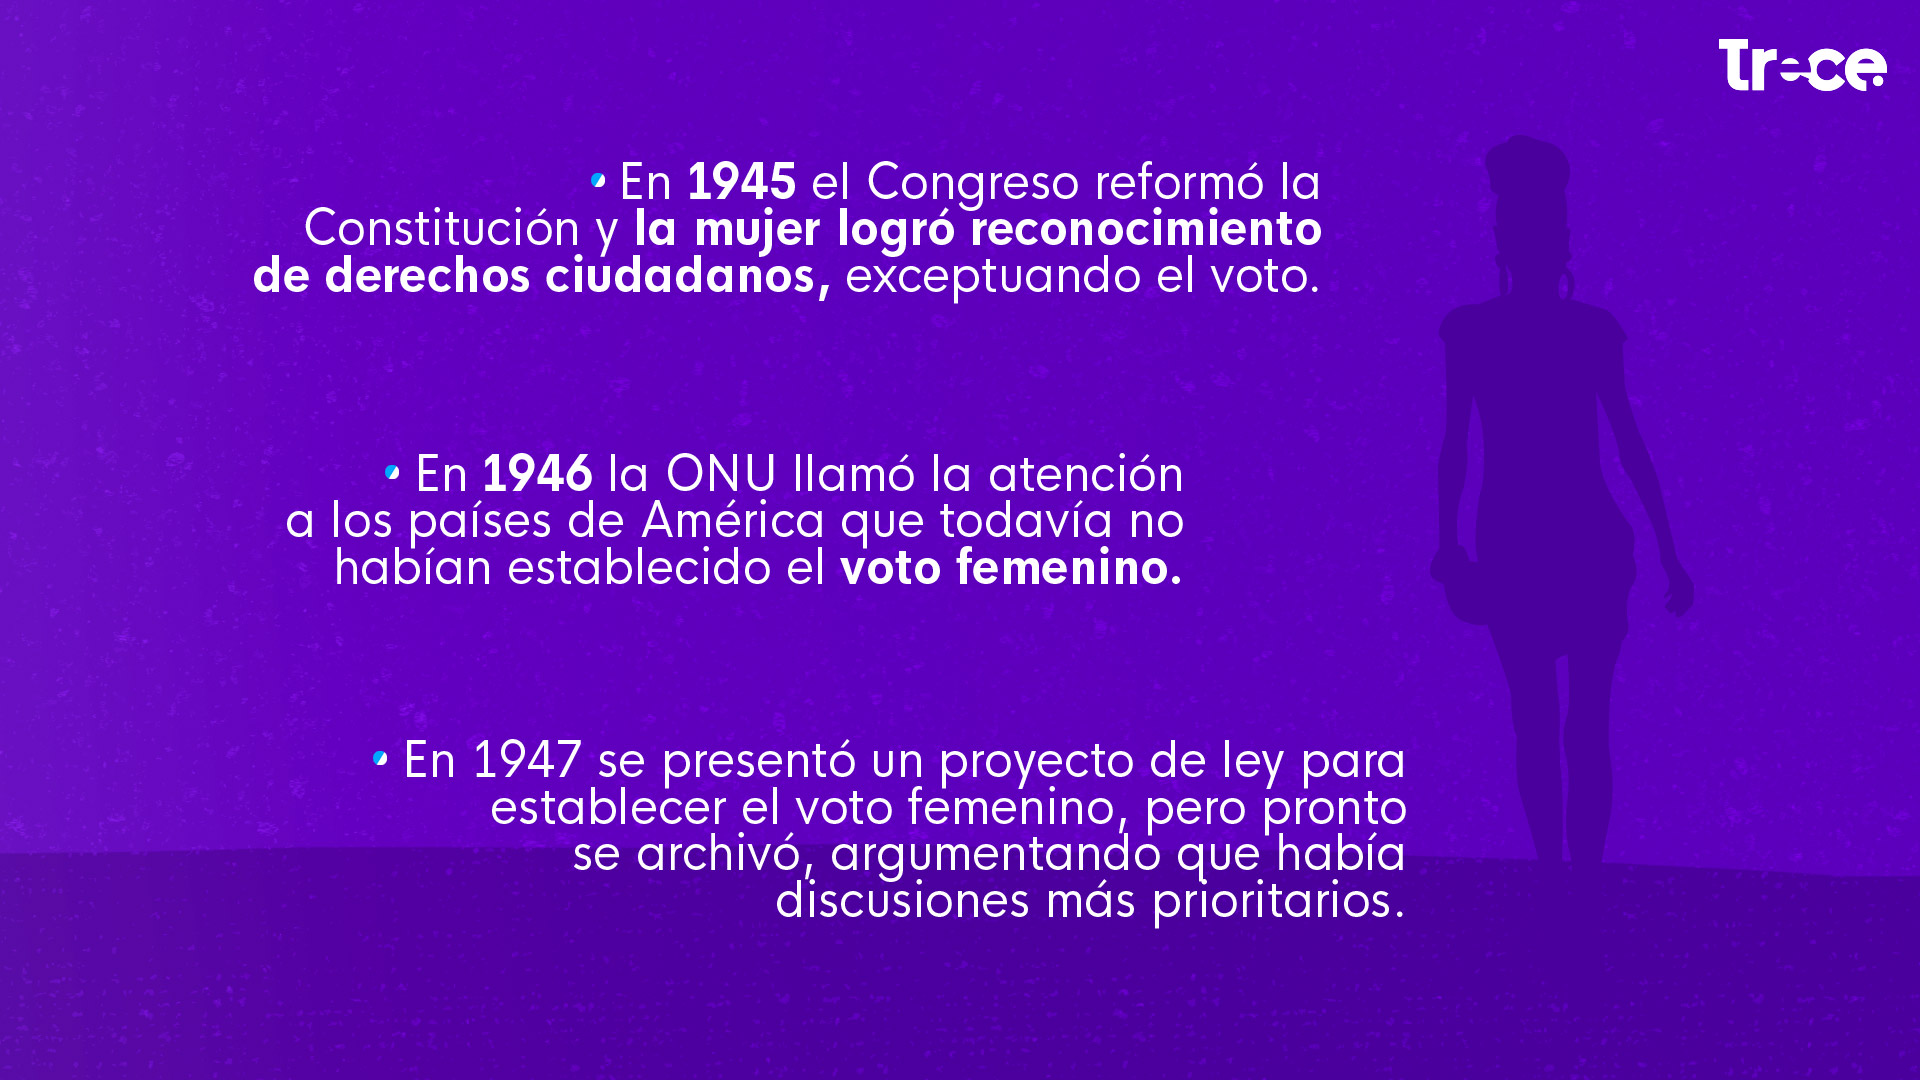 La historia del voto femenino en Colombia